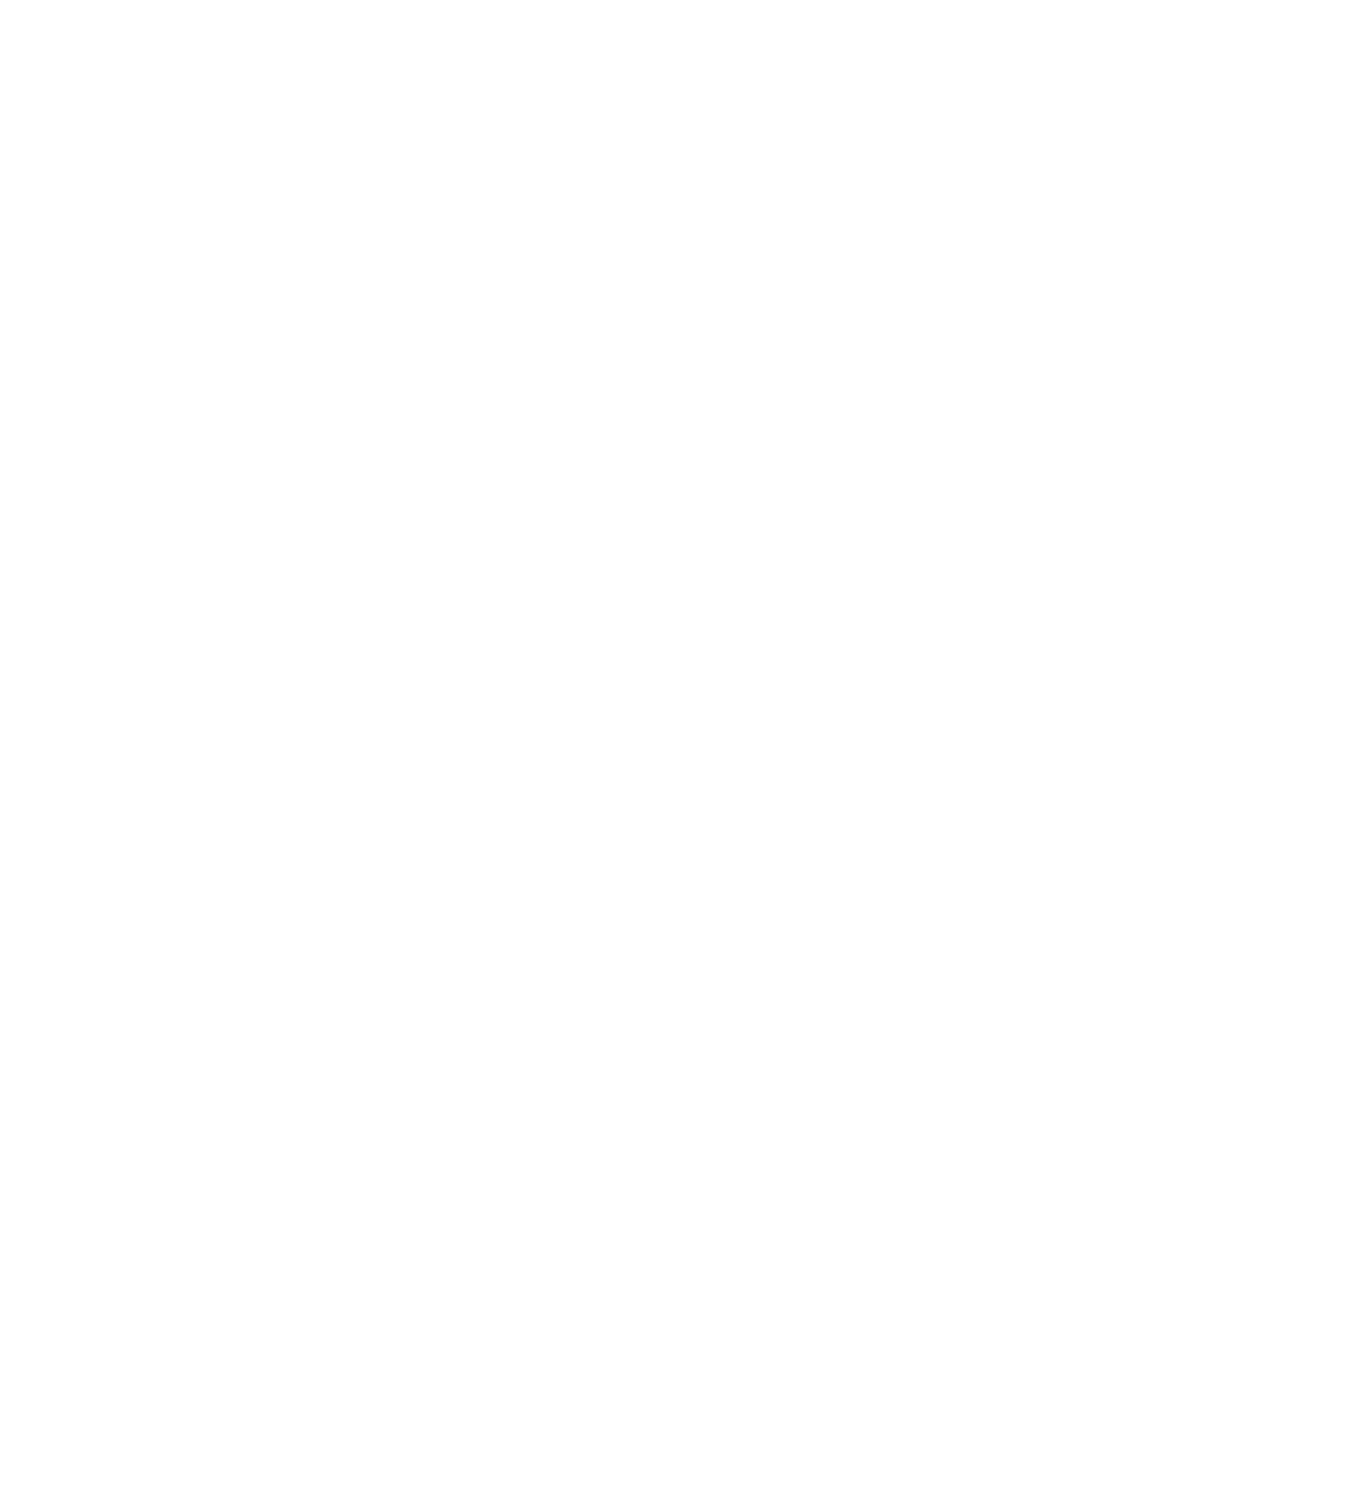 Old Second Bancorp logo for dark backgrounds (transparent PNG)